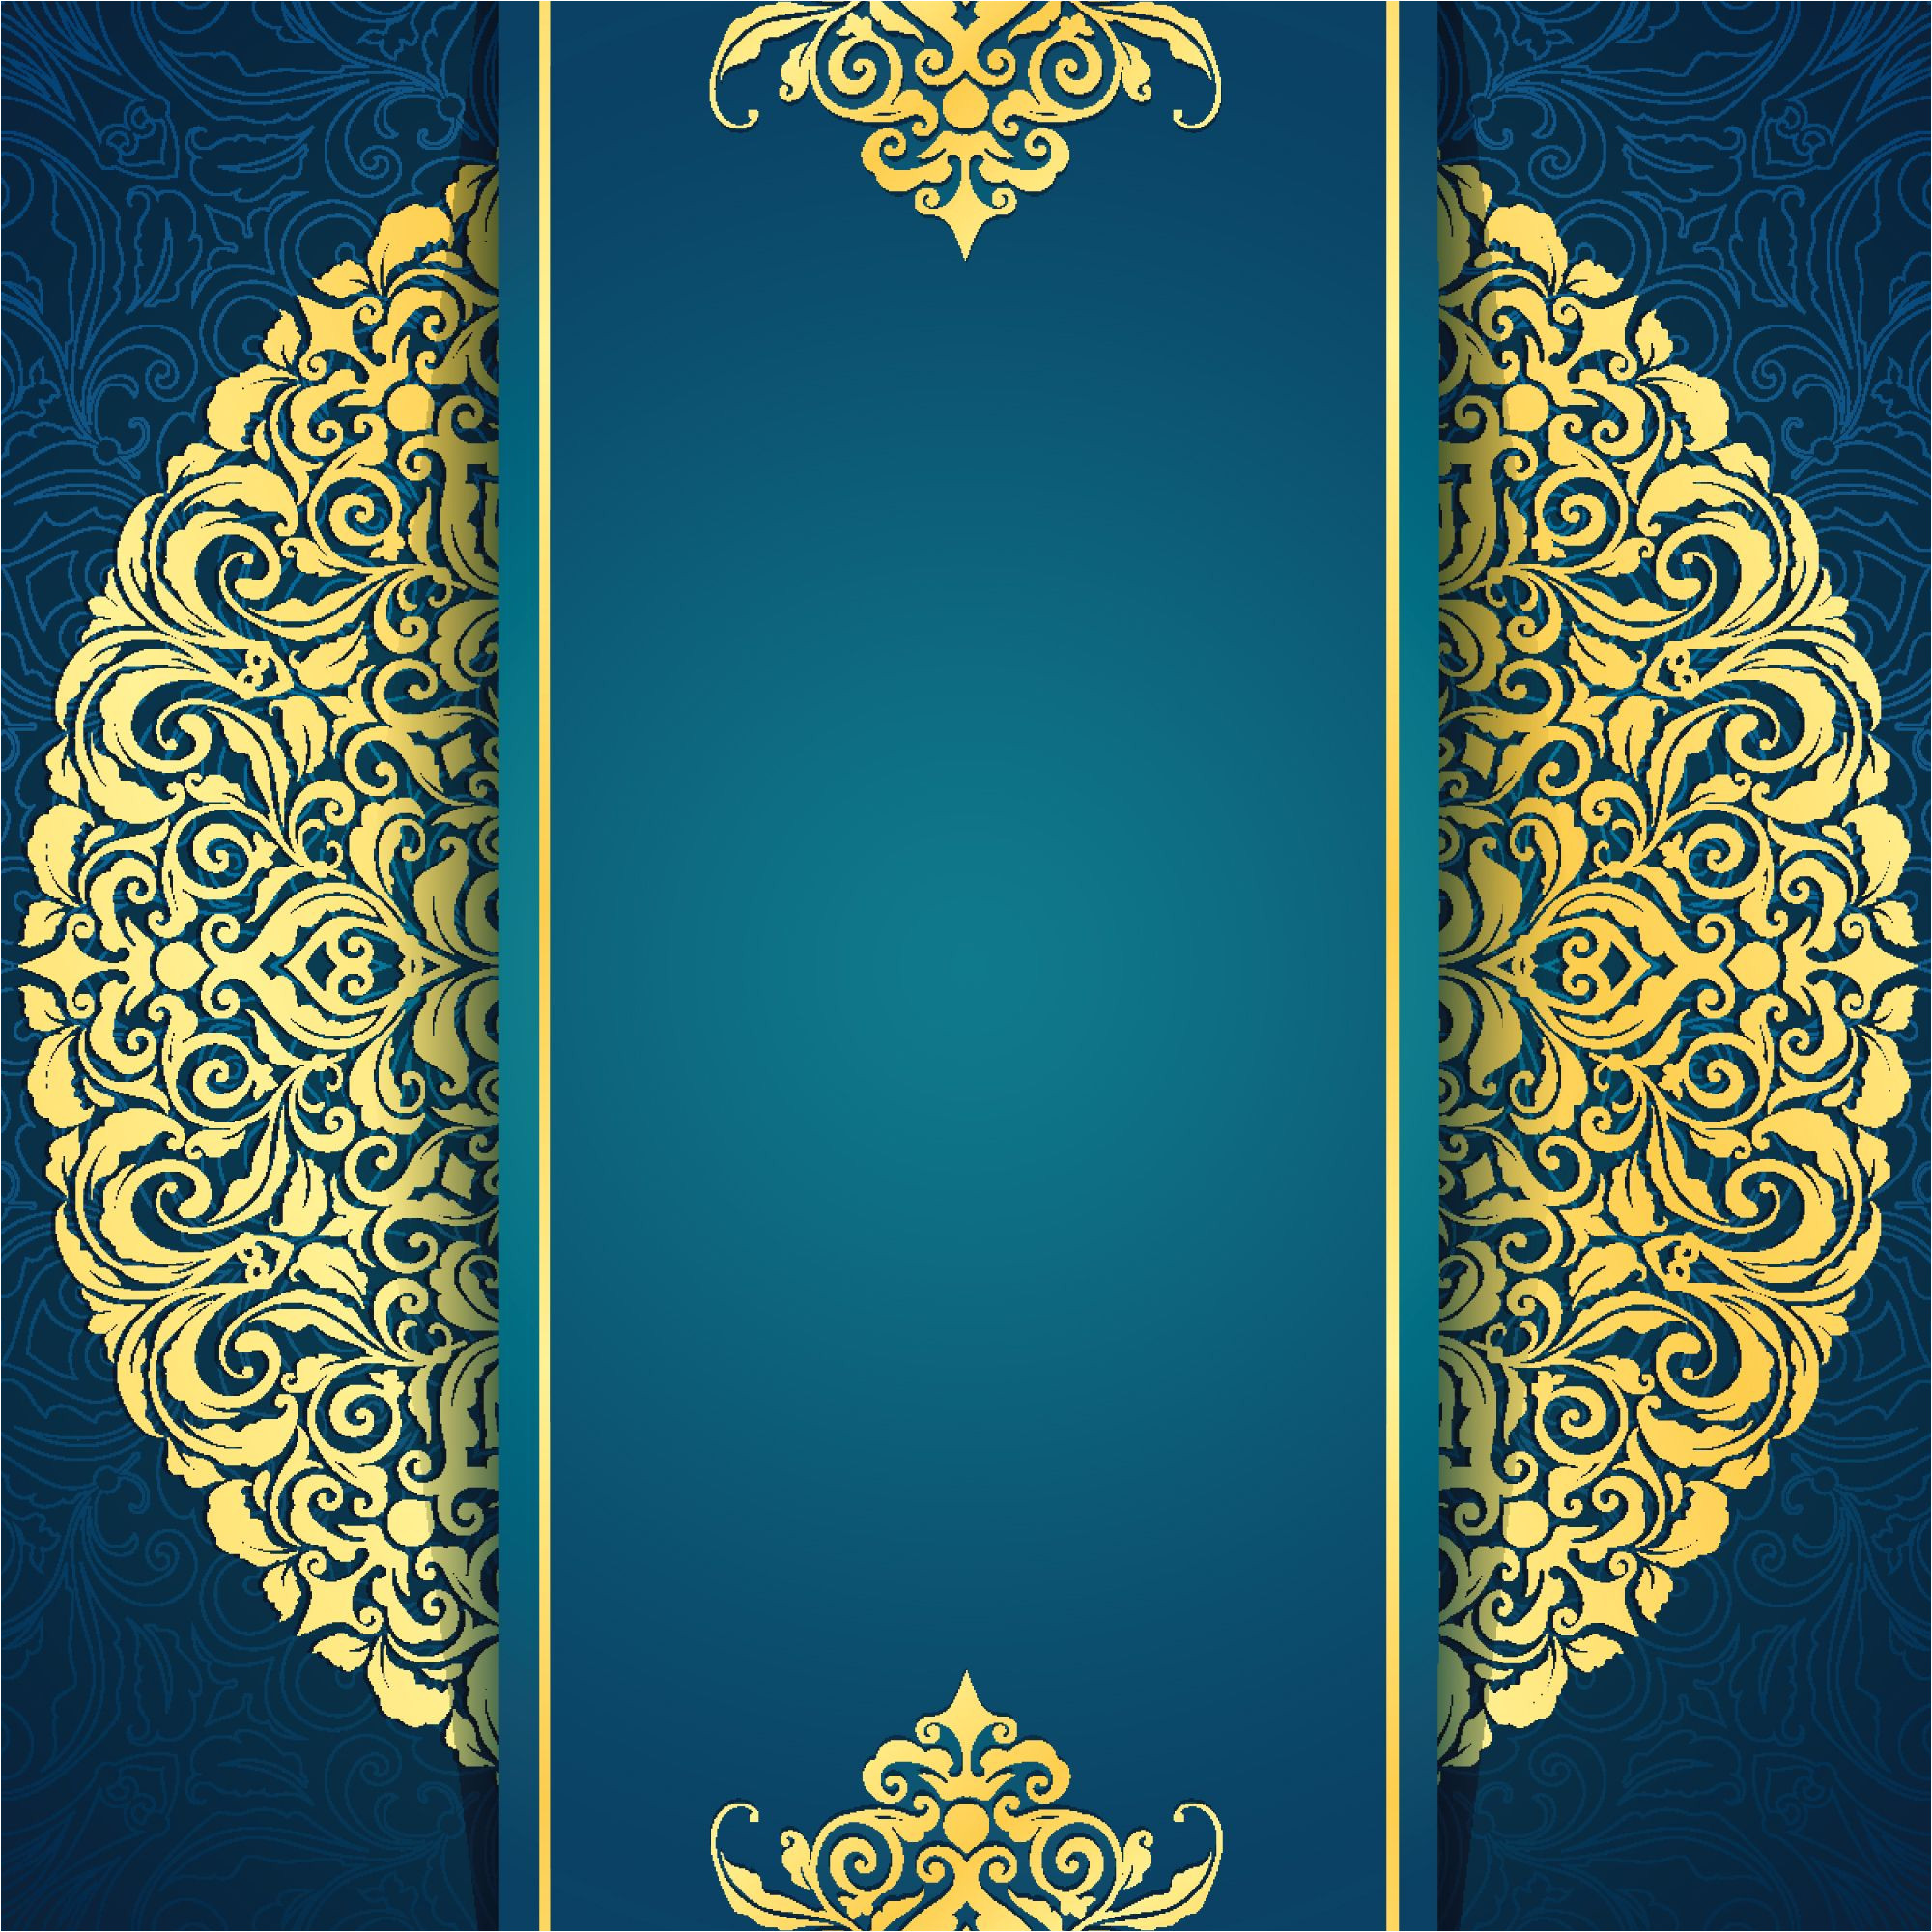 Invitation Card for Ramadan Eid 14 Elegant Invitation Card Background Images Images with